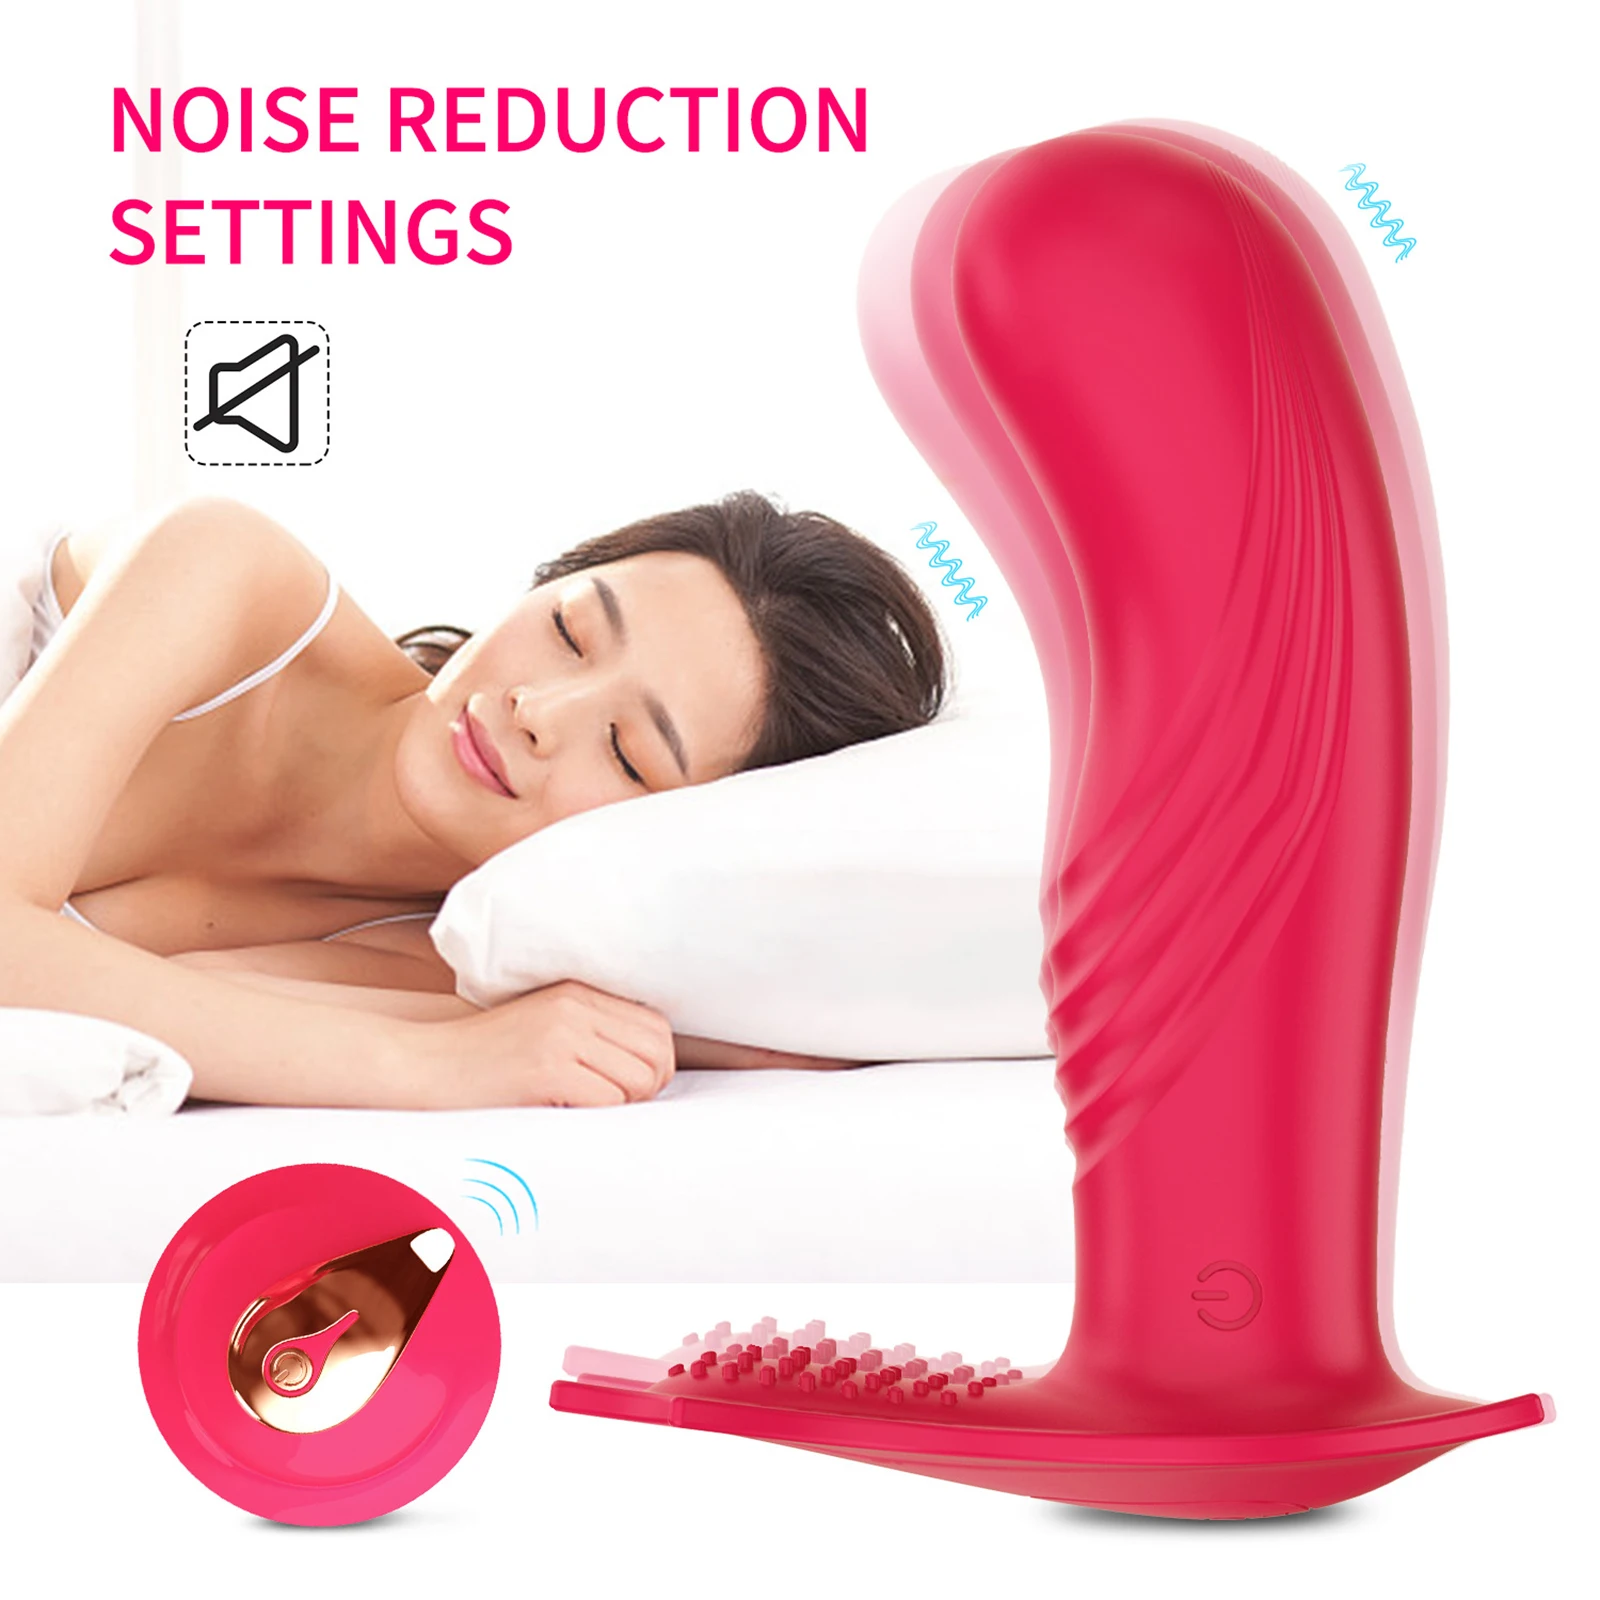 

Wireless Remote Control Vibrator Love-vibrating Stick For Women Single Vibrator Perfect Assistant Device In Your Sexual Life Cj